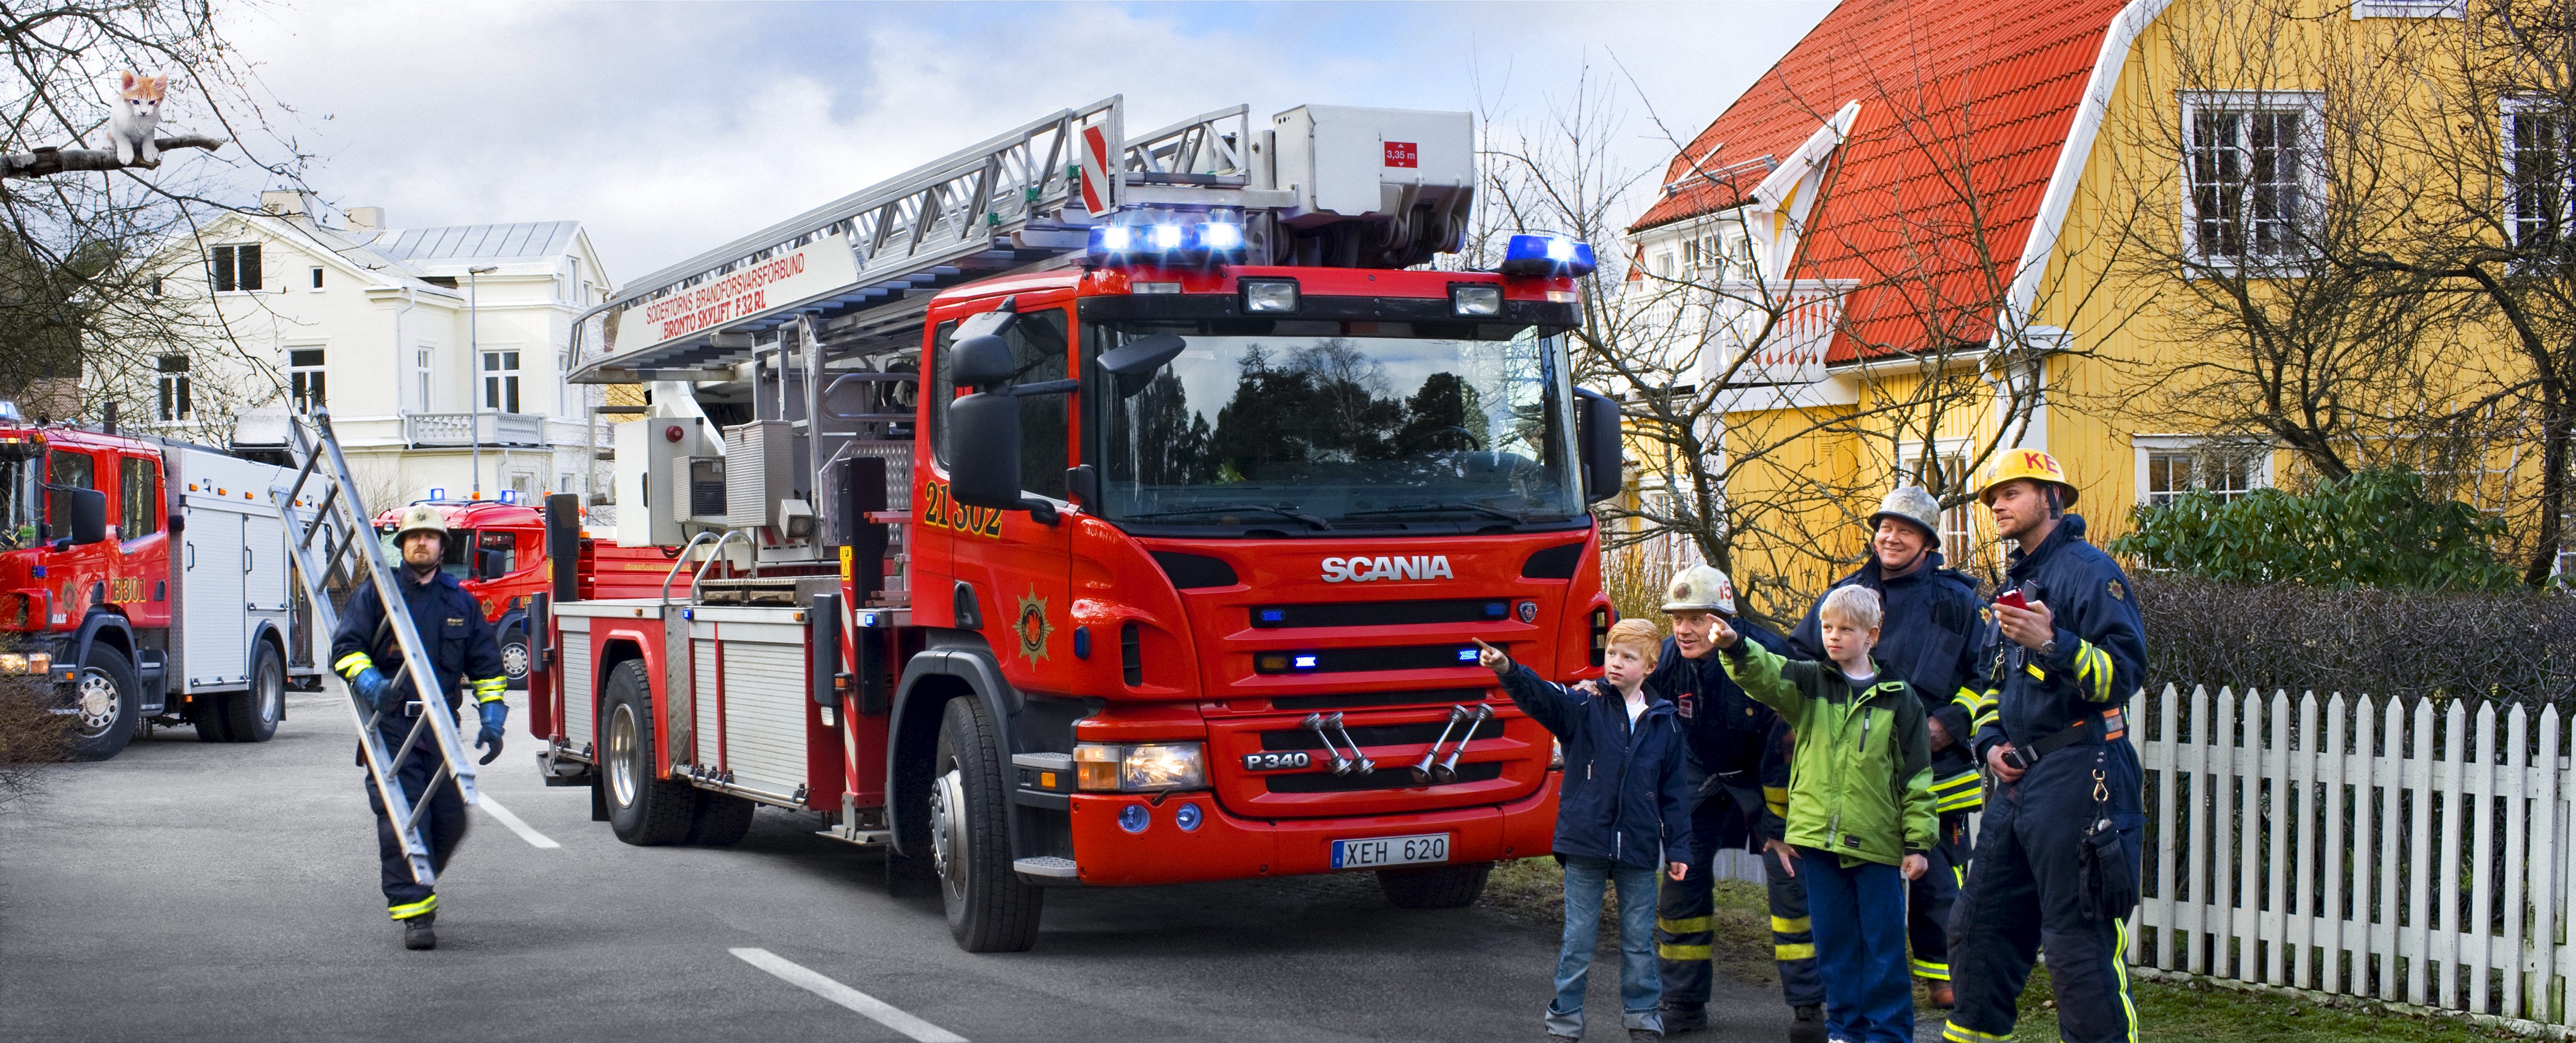 Scania Vehicle Truck Fire Engine Firefighter Wallpaper